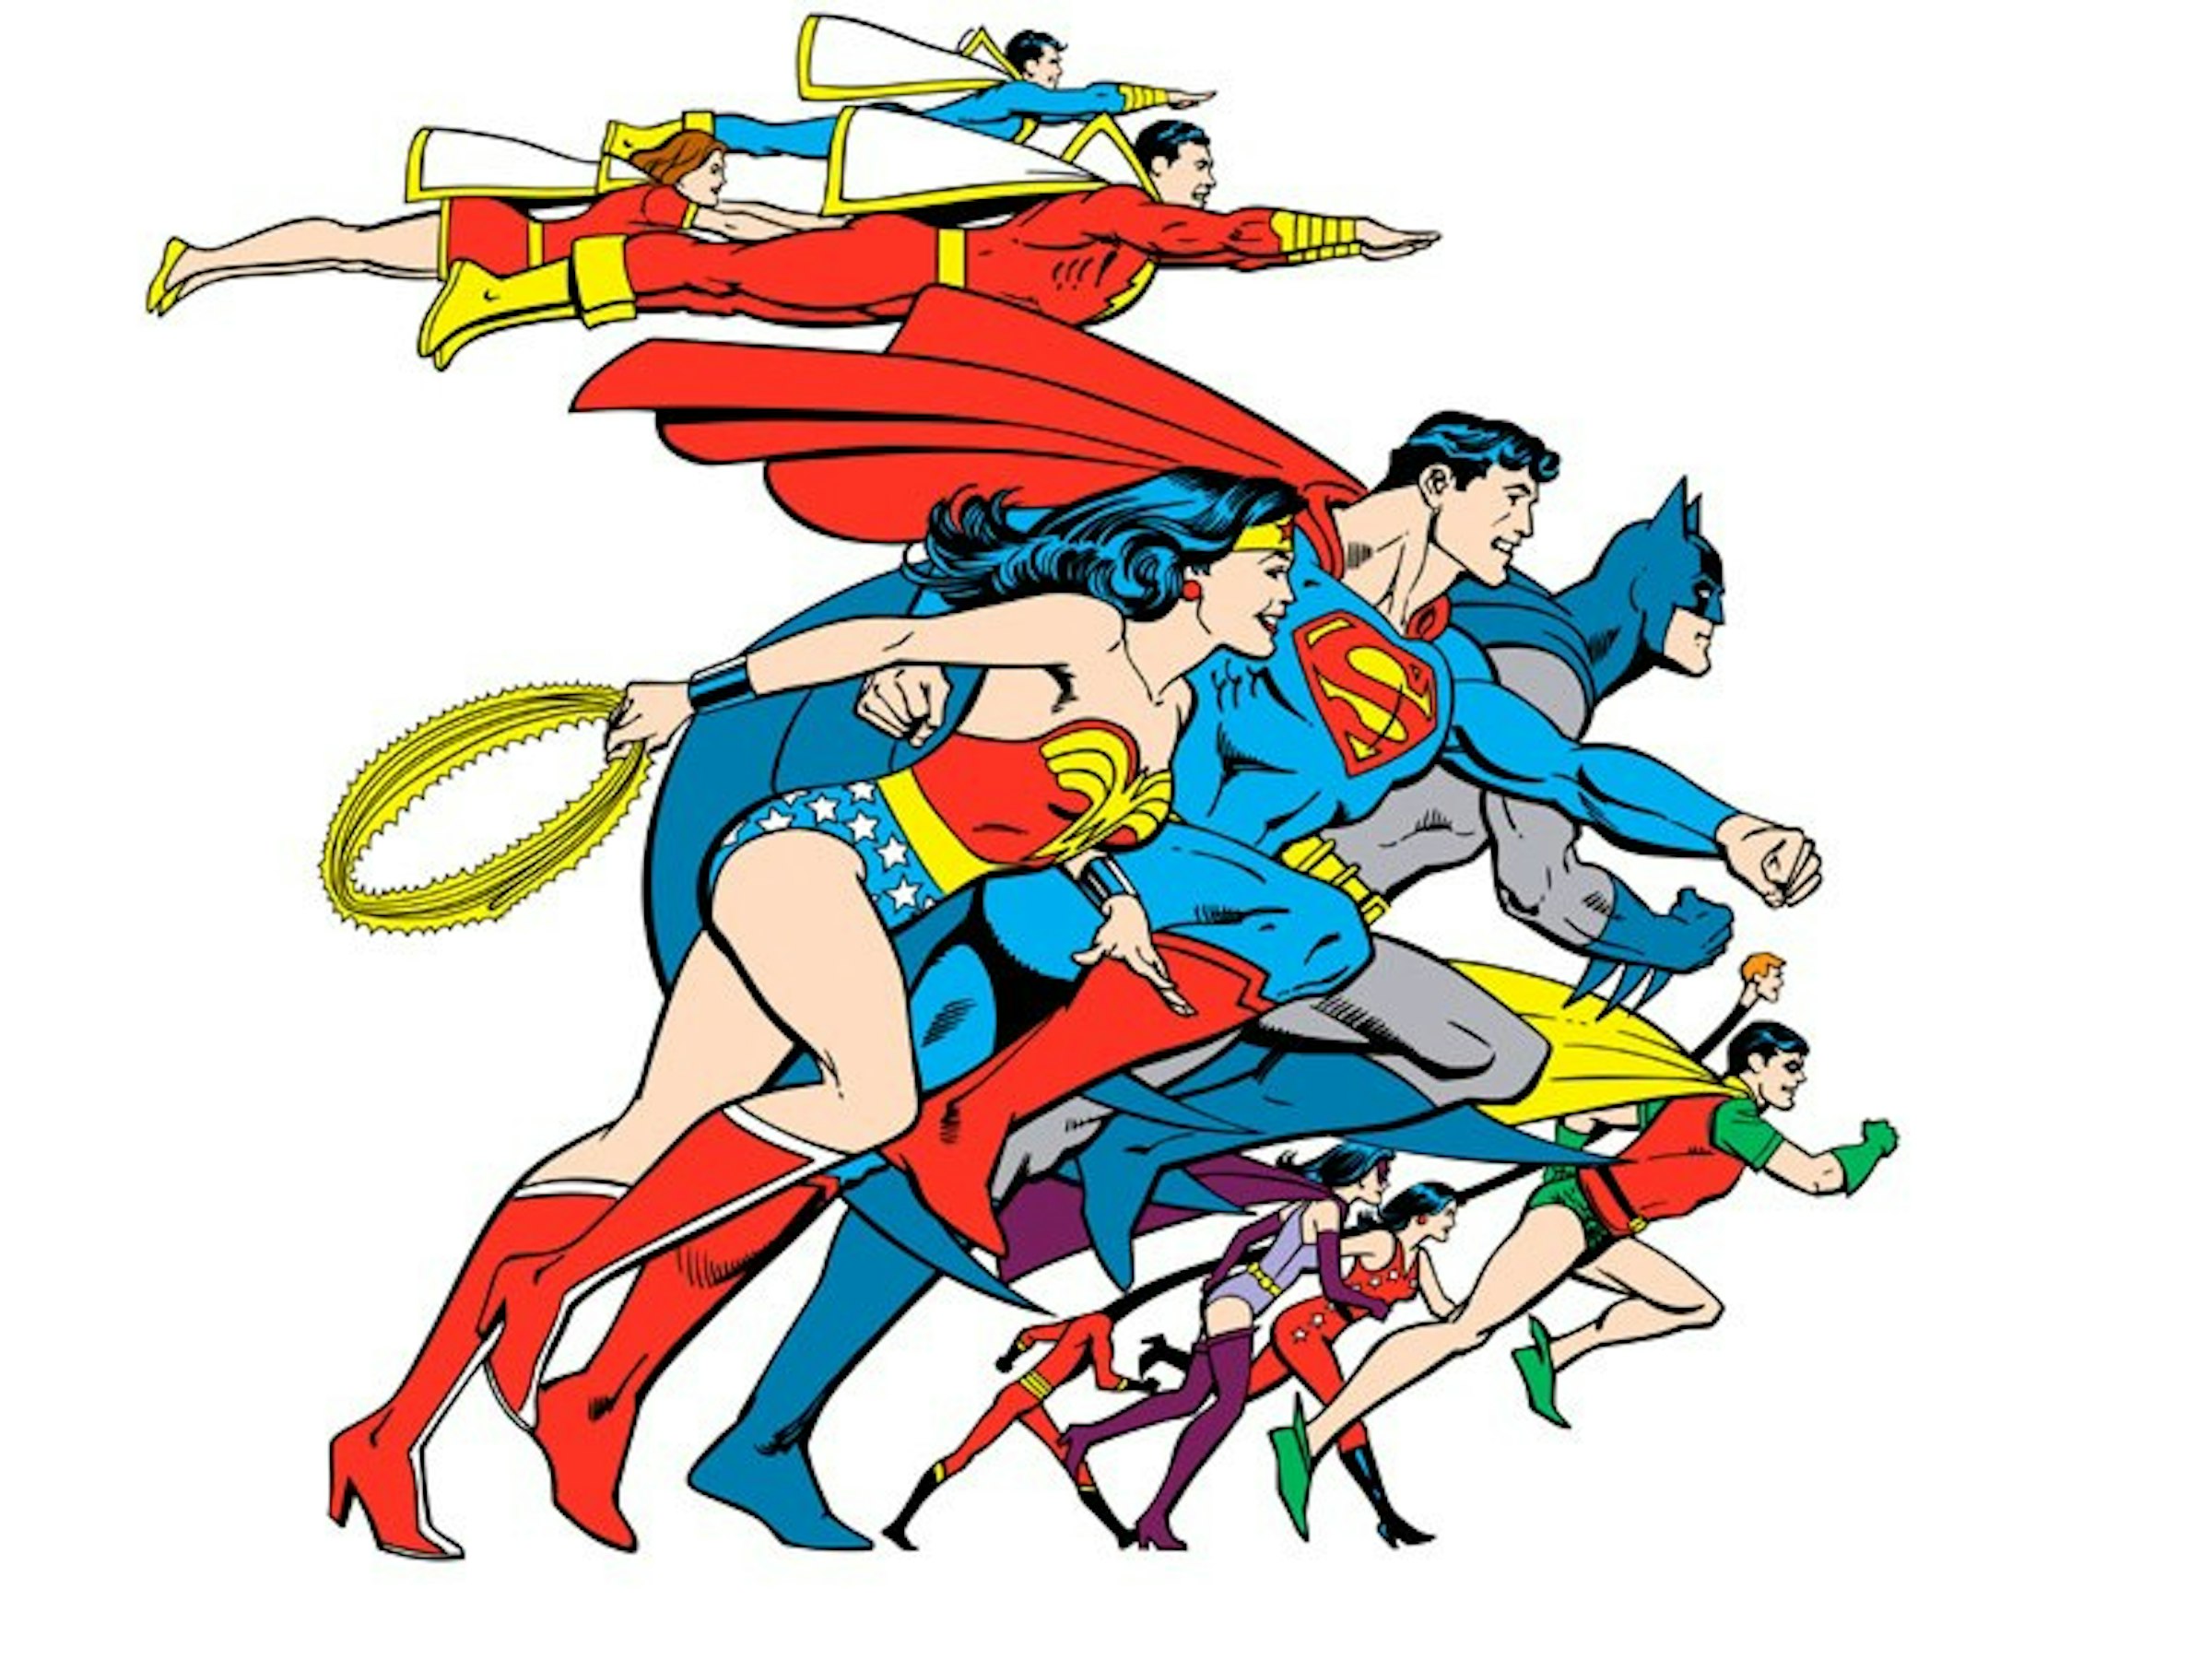 Superhero has. Jose Luis Garcia Lopez комиксы. Супергерои. Персонажи супергероев. Комиксы Супергерои.